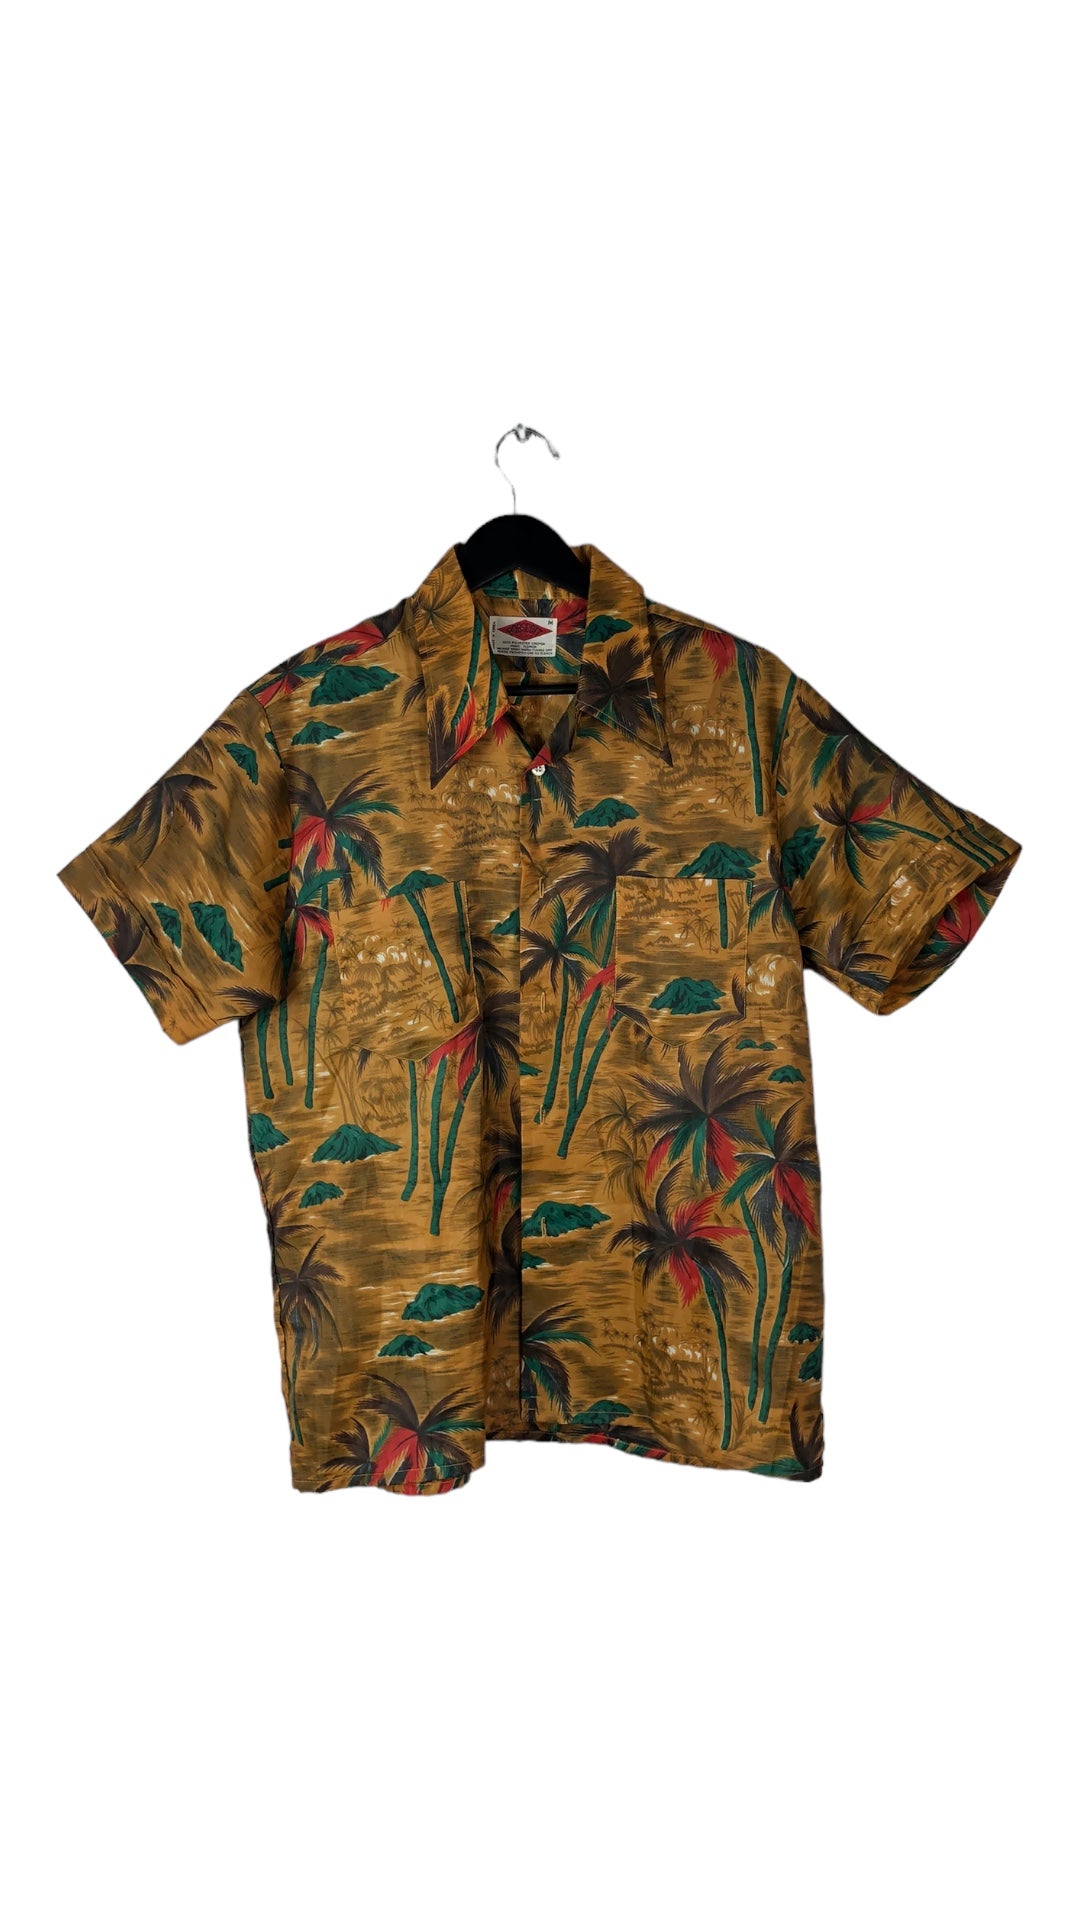 VTG Bobscott Tan Hawaiian Shirt Sz M